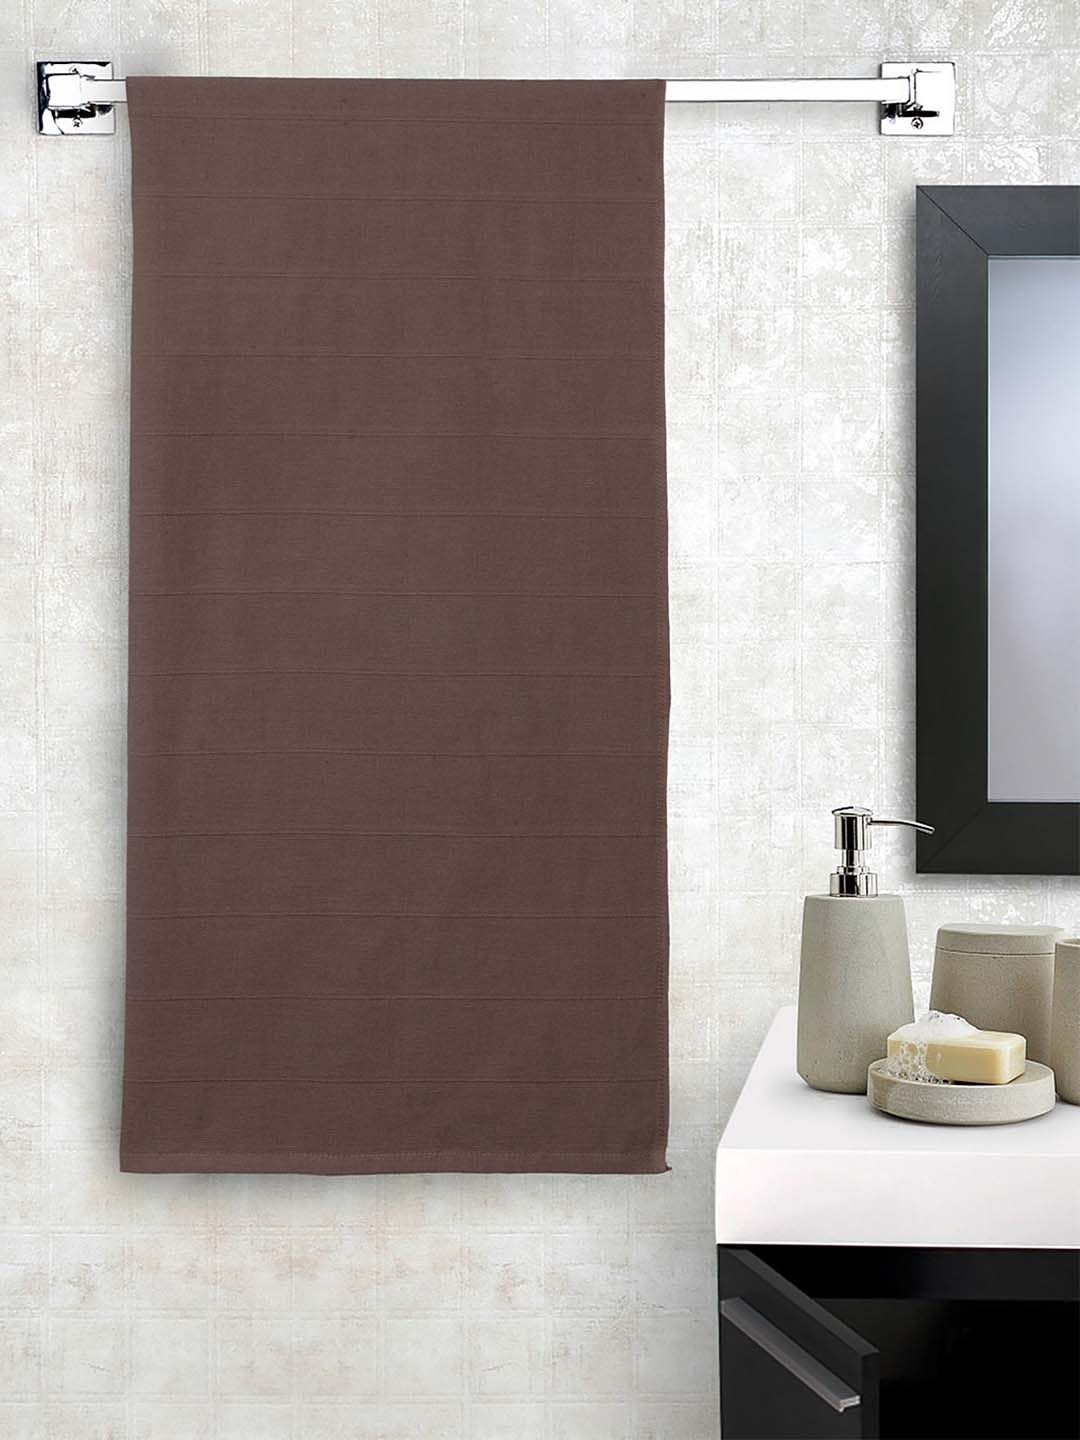 Spaces Livlite Chocolate Bath Towel (Brown)